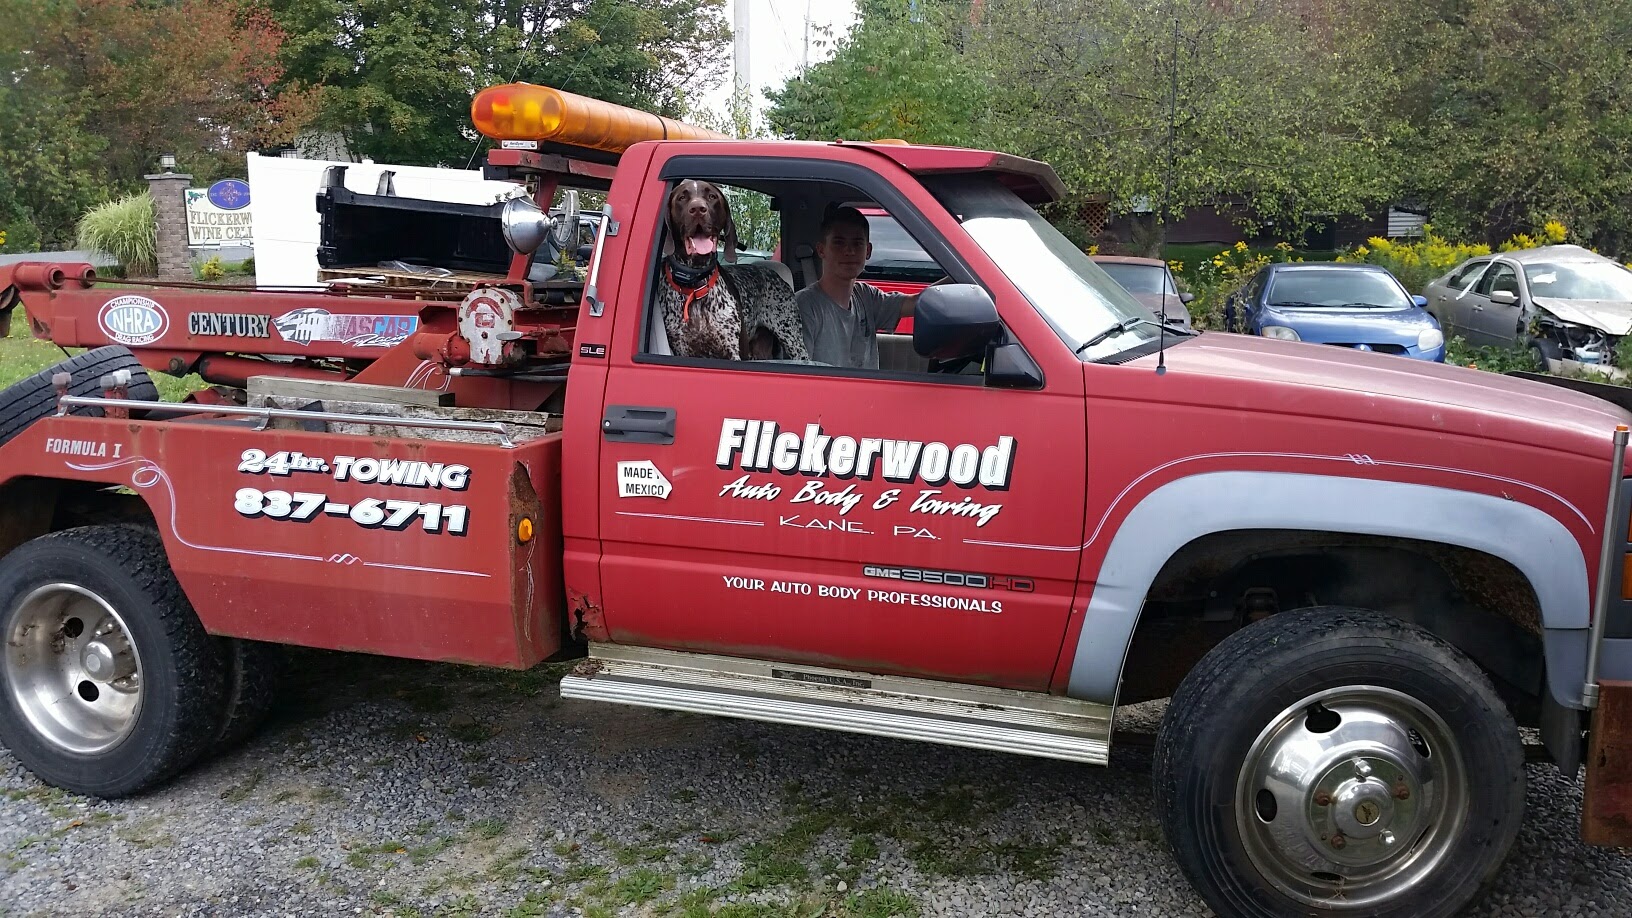 Flickerwood Auto